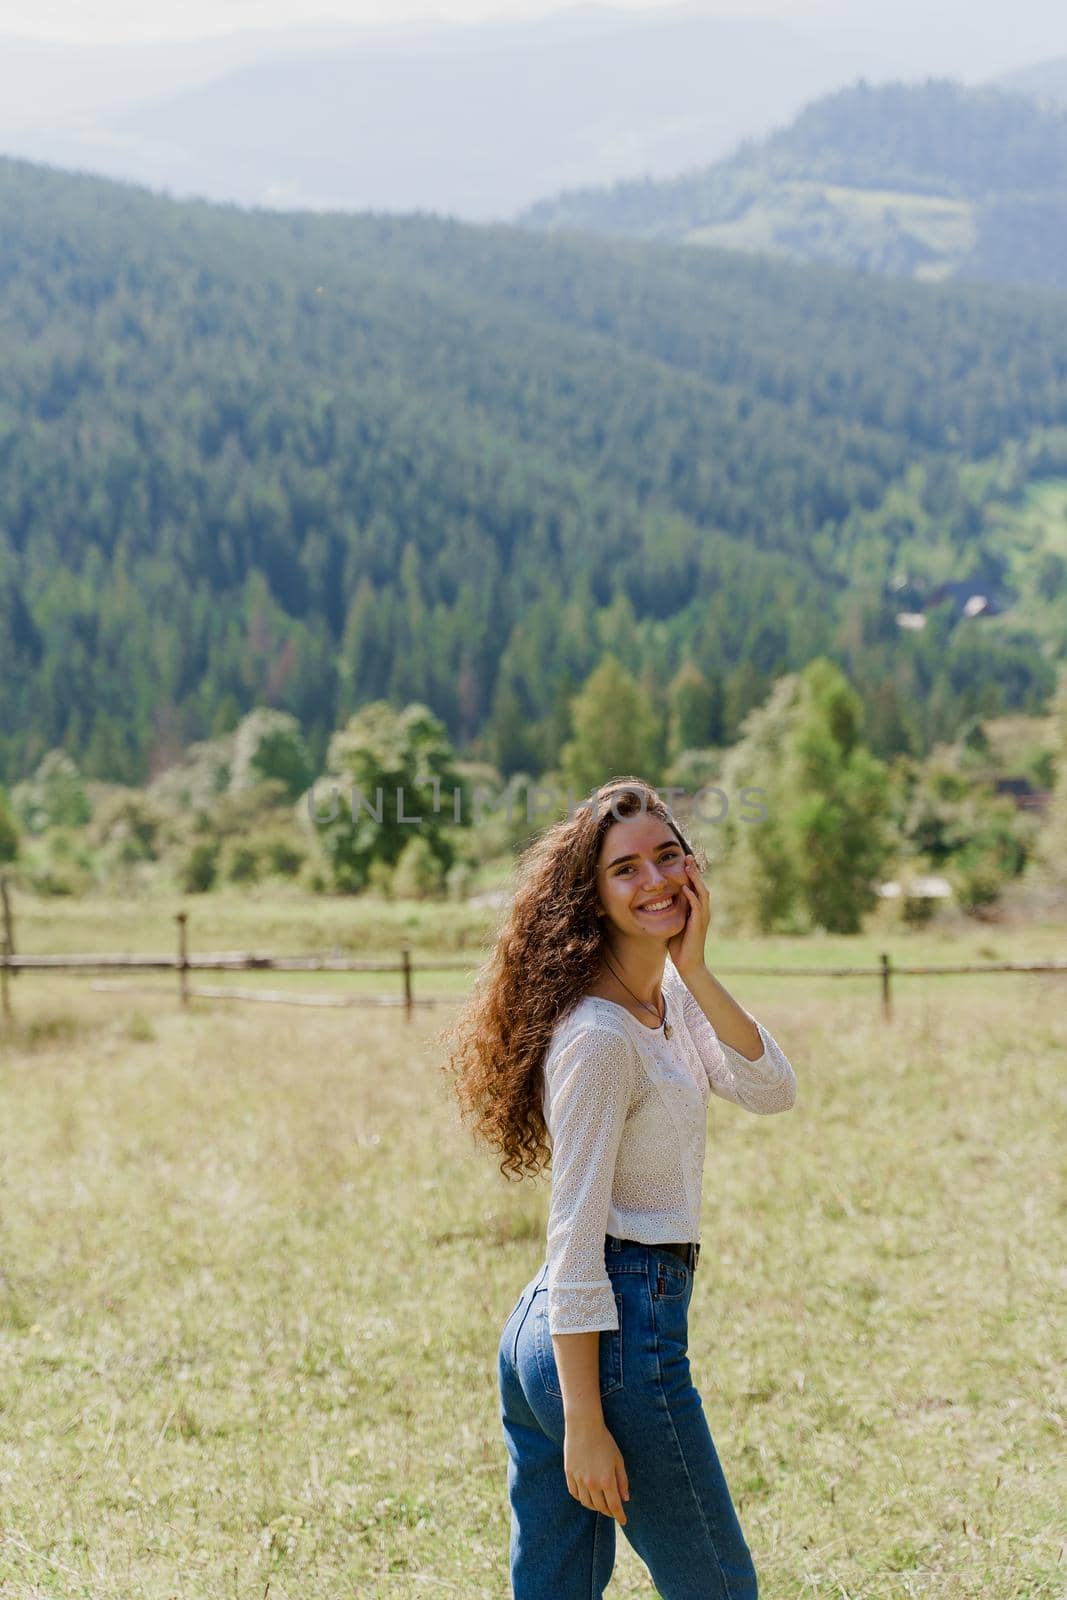 Tourism travelling in Ukraine. Girl enjoying the mountain hills view. Feeling freedom in Karpathian mountains.